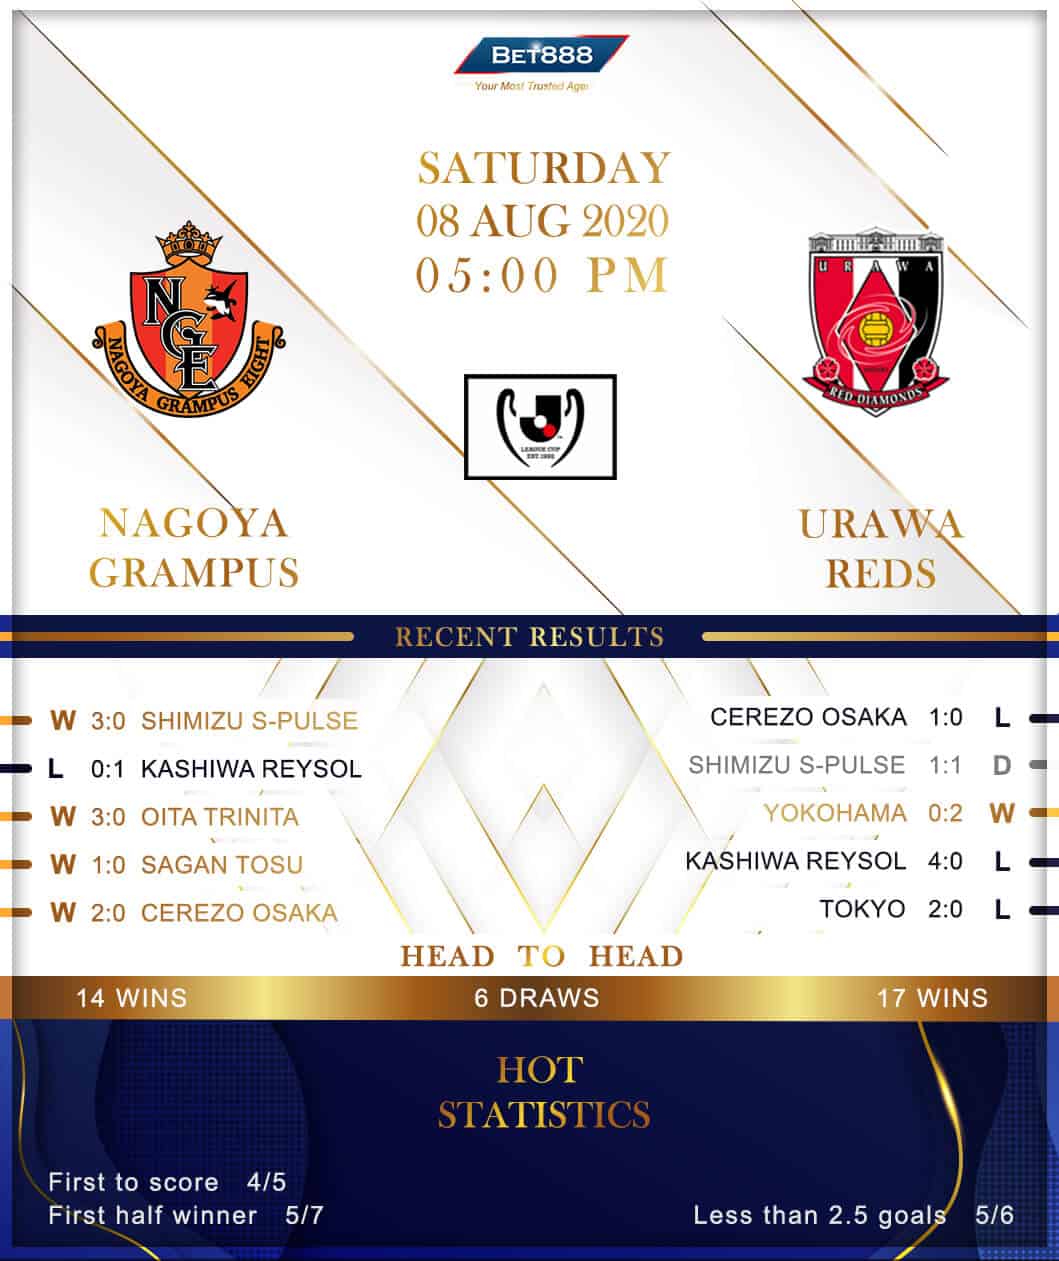 Nagoya Grampus vs Urawa Red Diamonds 08/08/20